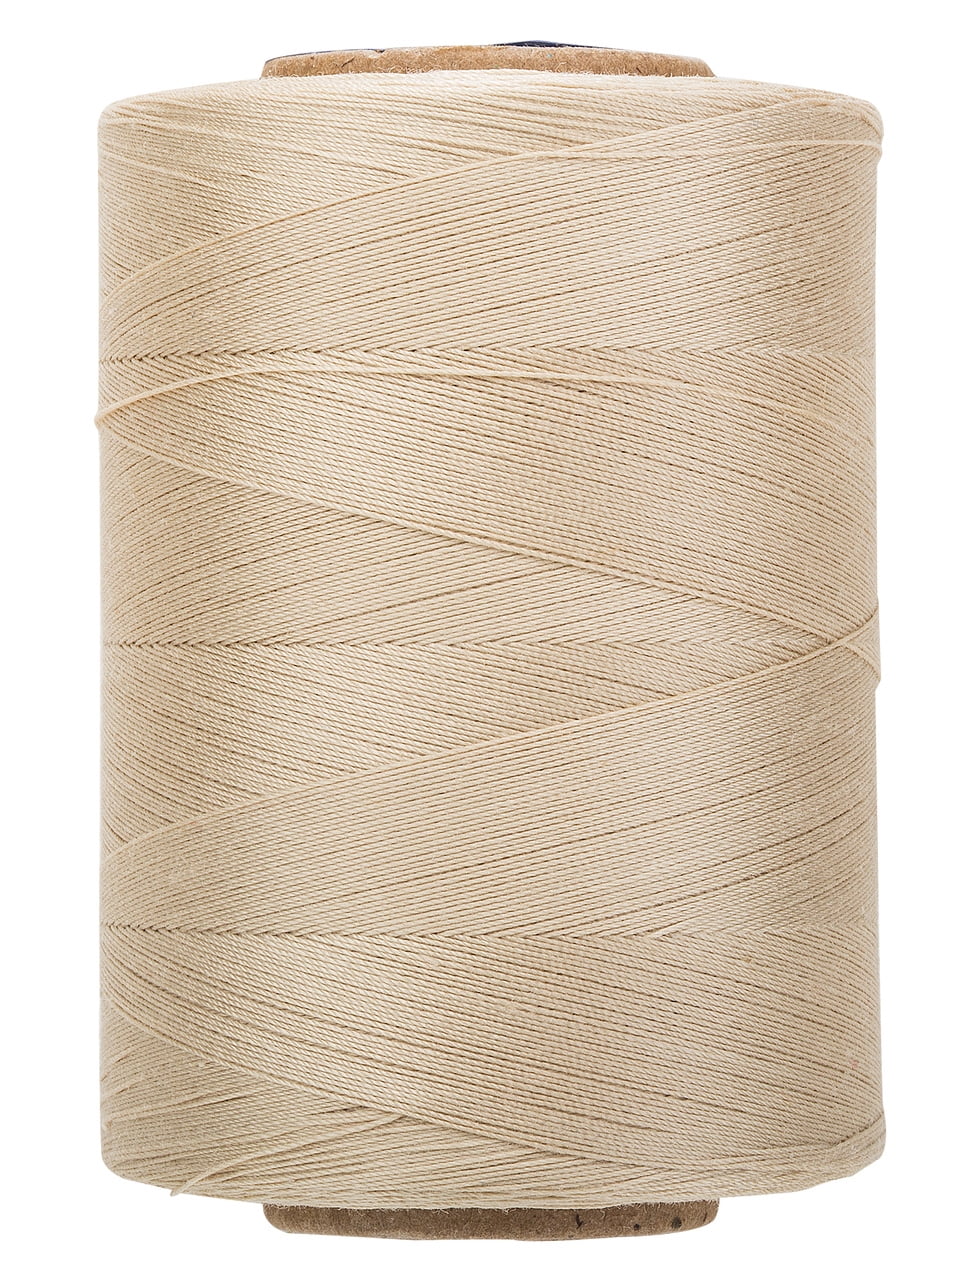 Coats & Clark 100% Cotton Sewing Thread, 1200 yd Size 50, Ecru 